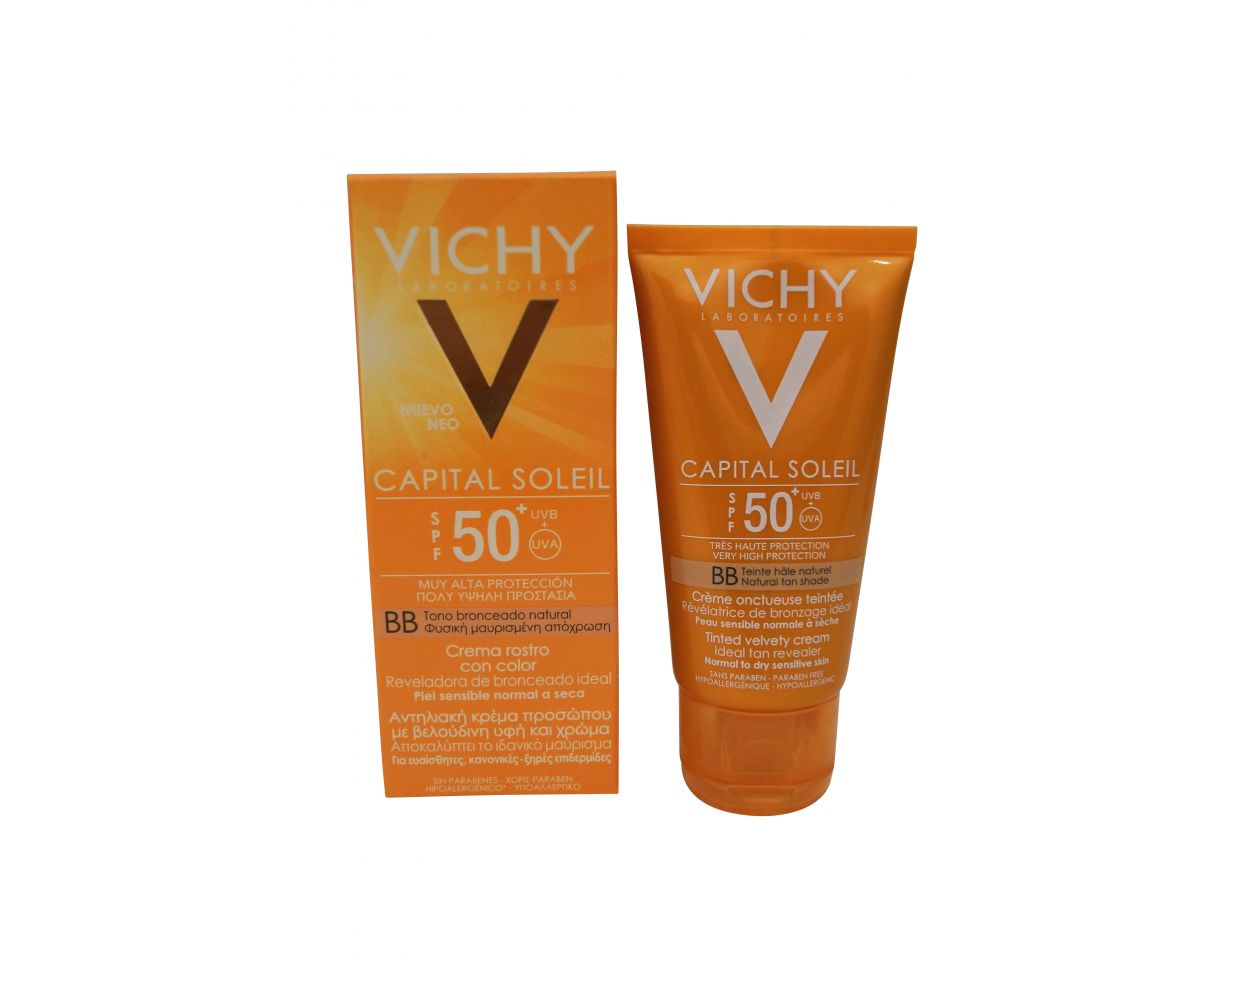 Vichy spf 50 для лица. Vichy SPF 50. Виши СПФ 50. Vichy Capital Soleil SPF 50. Vichy BB Cream.